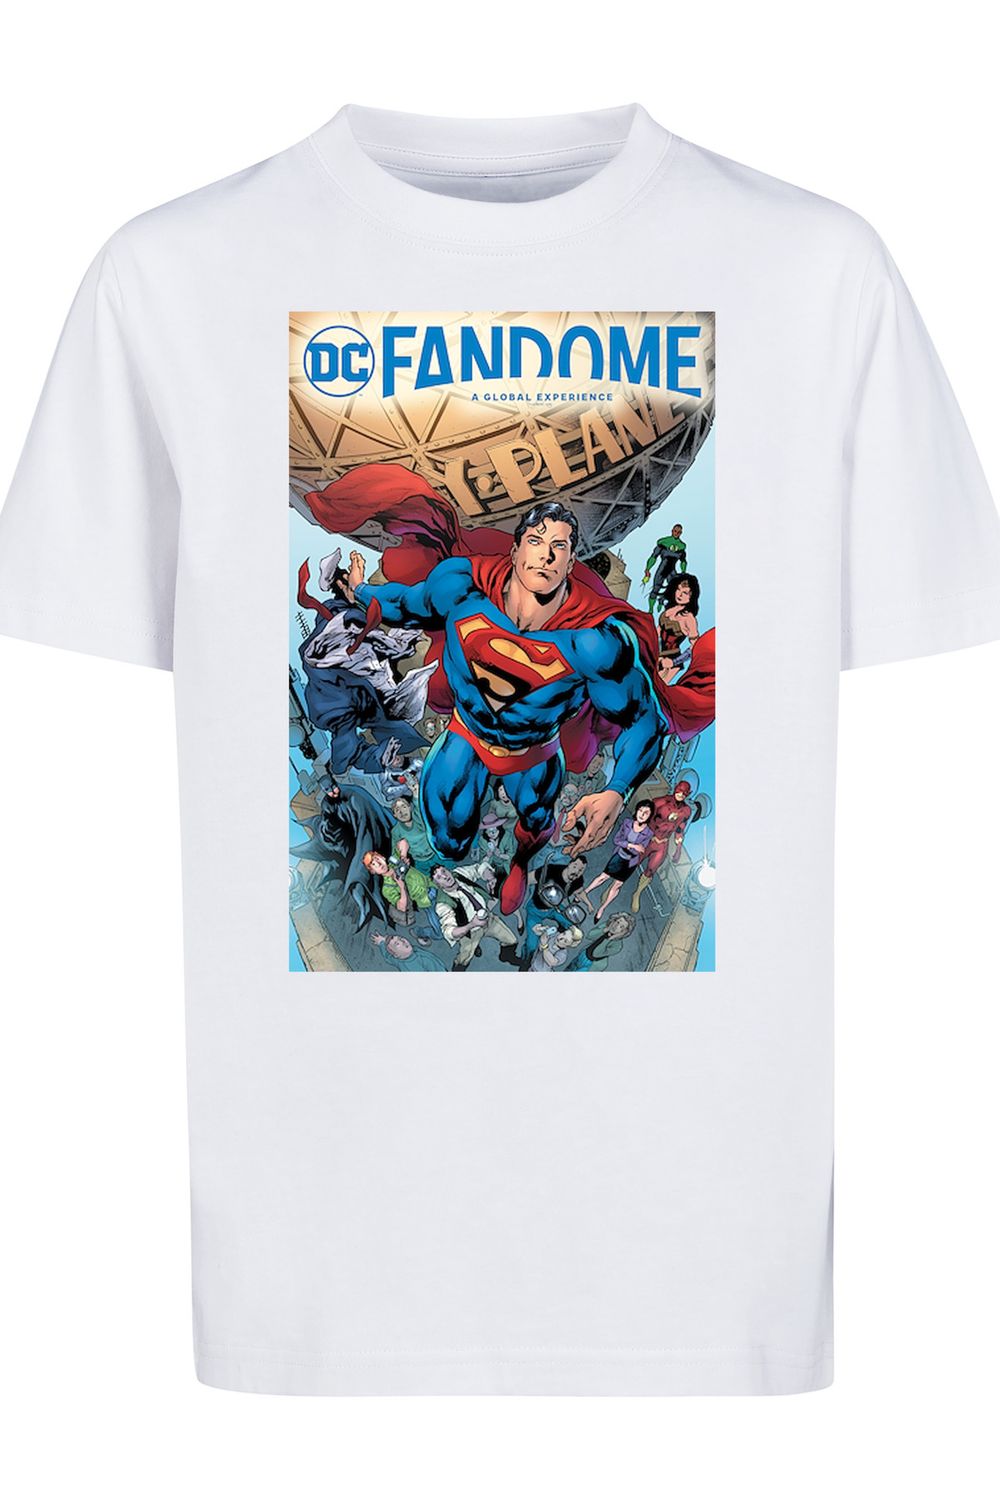 Superman Hero T-Shirt Collage Basic Kids Kinder - Trendyol mit DC Fandome F4NT4STIC